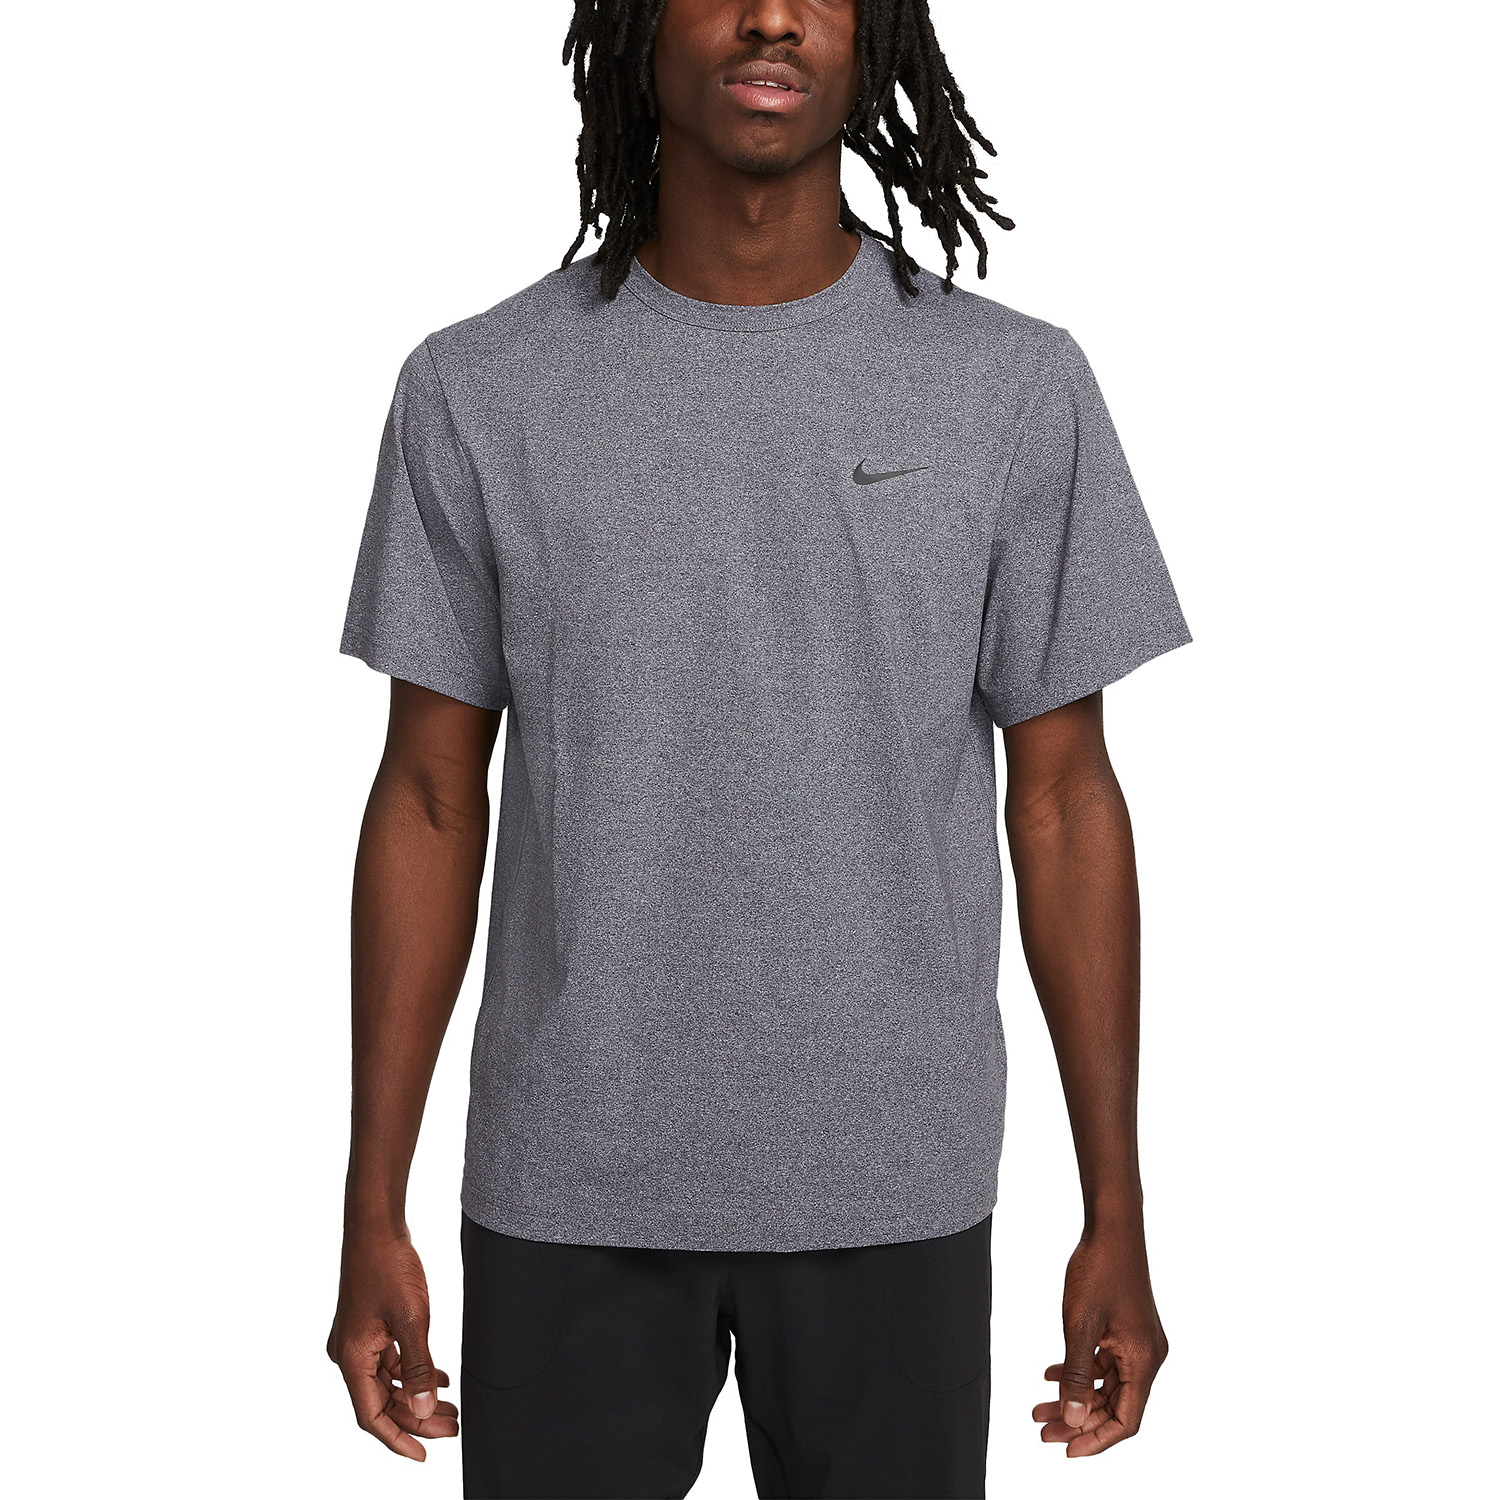 Nike Dri-FIT Hyverse Men's Training T-Shirt - Obsidian/Heater